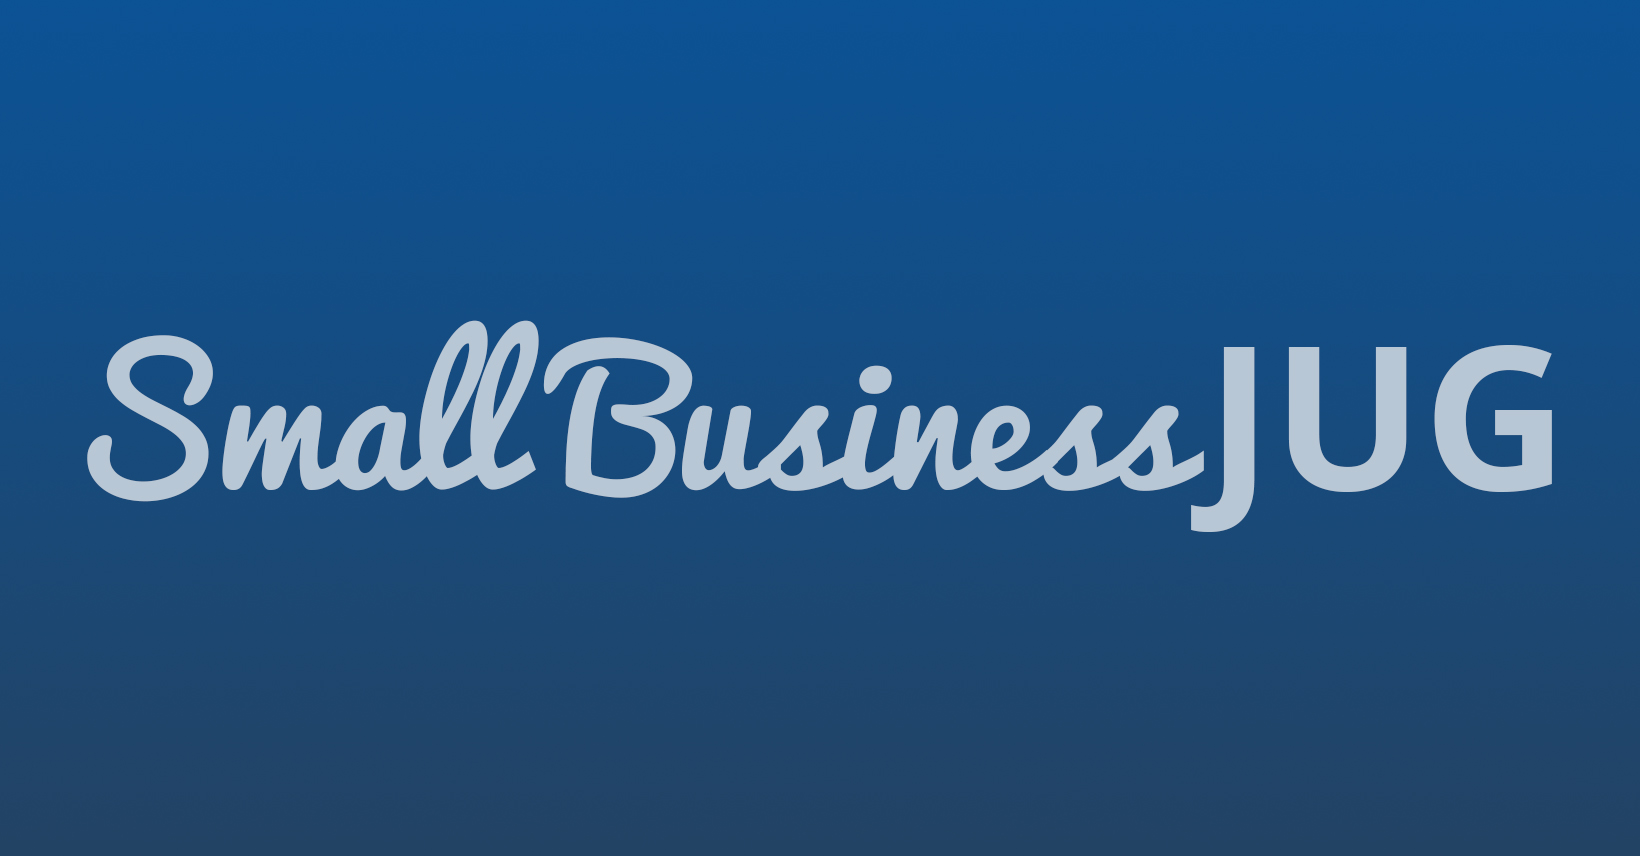 Small Business Virtual JUG Website Design Company Owners - using Joomla!